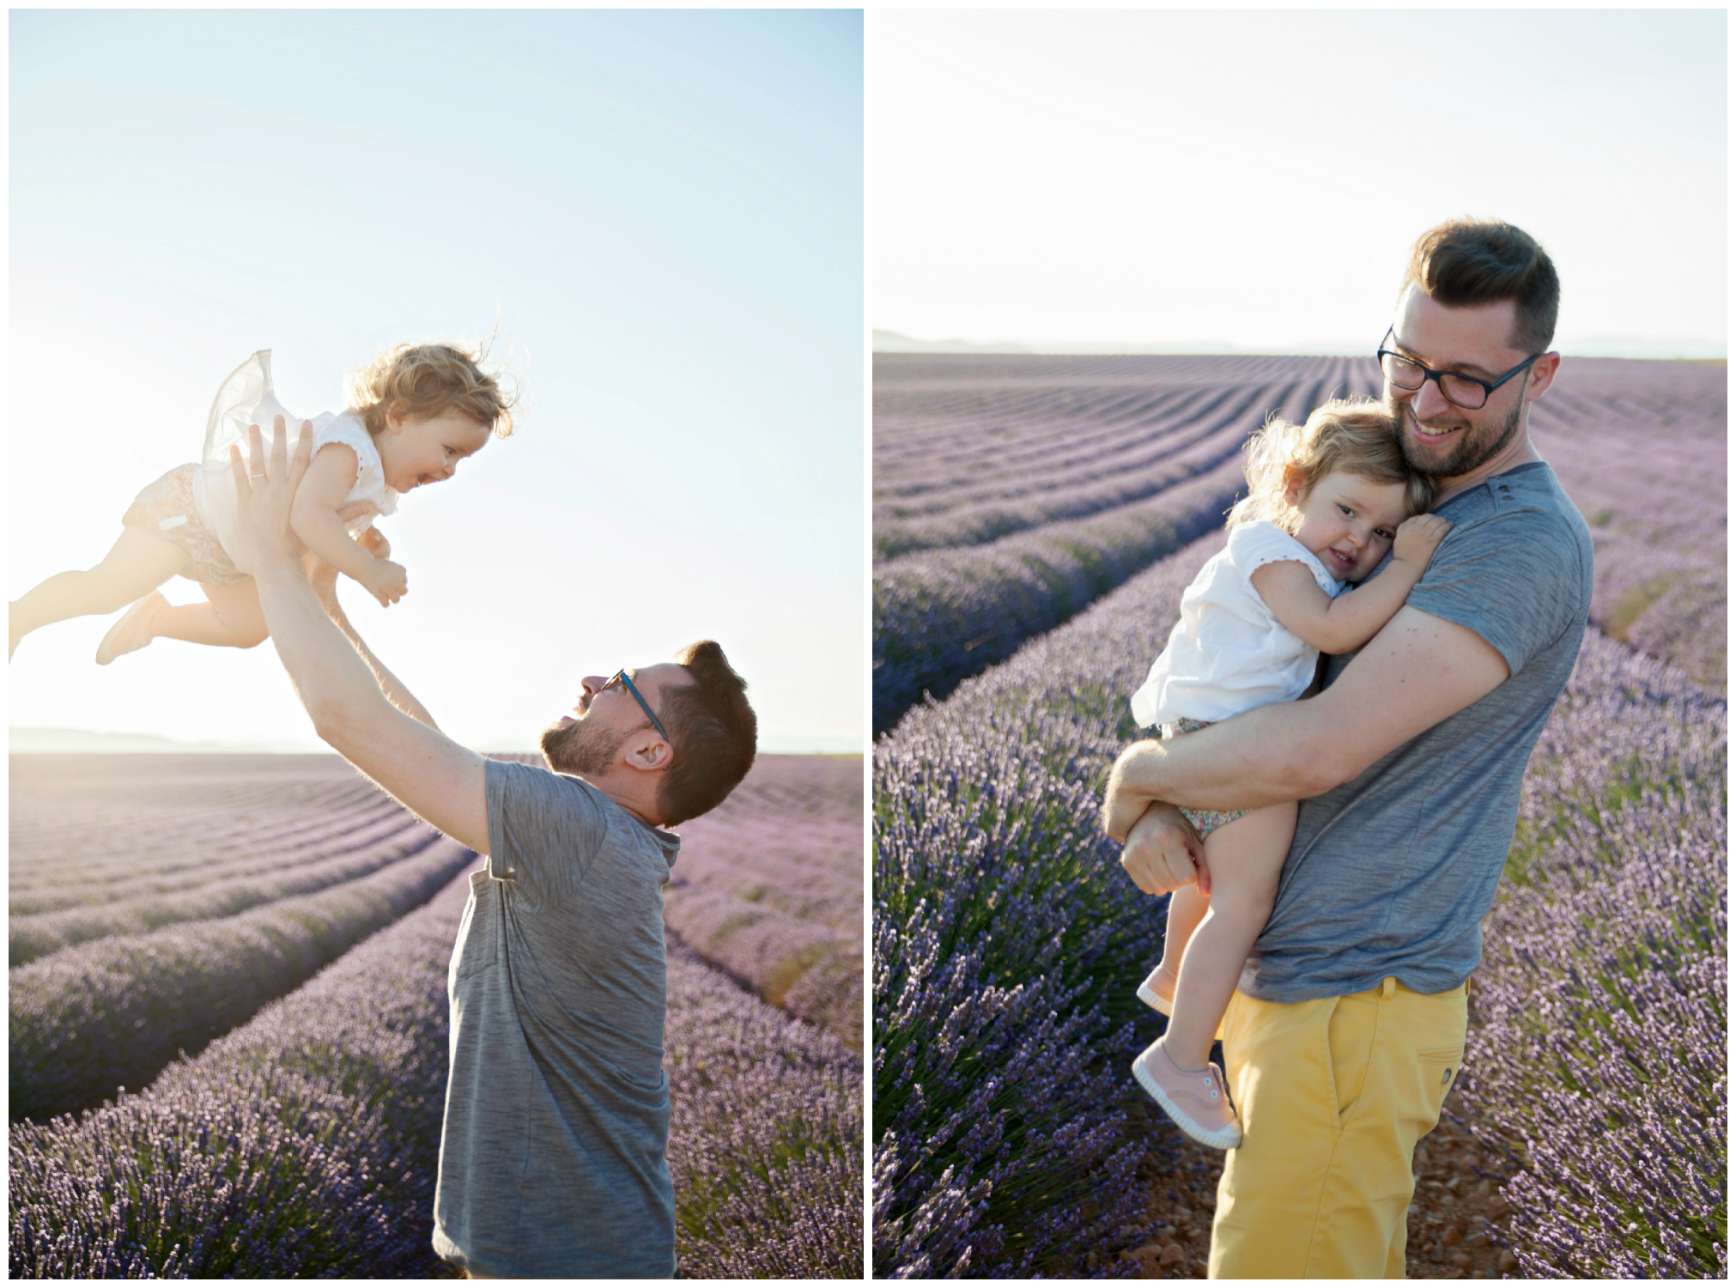 Lavender-fields-Provence-claraBmartin16